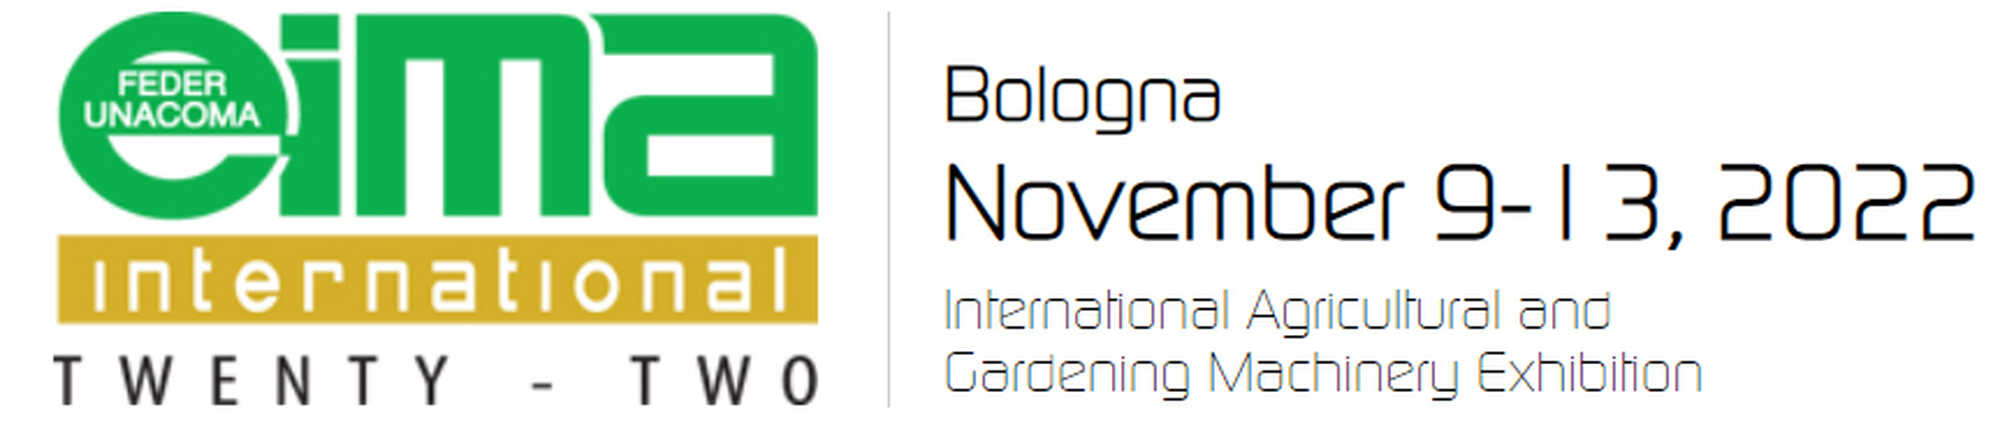 Bologna, 9. - 13. November 2022